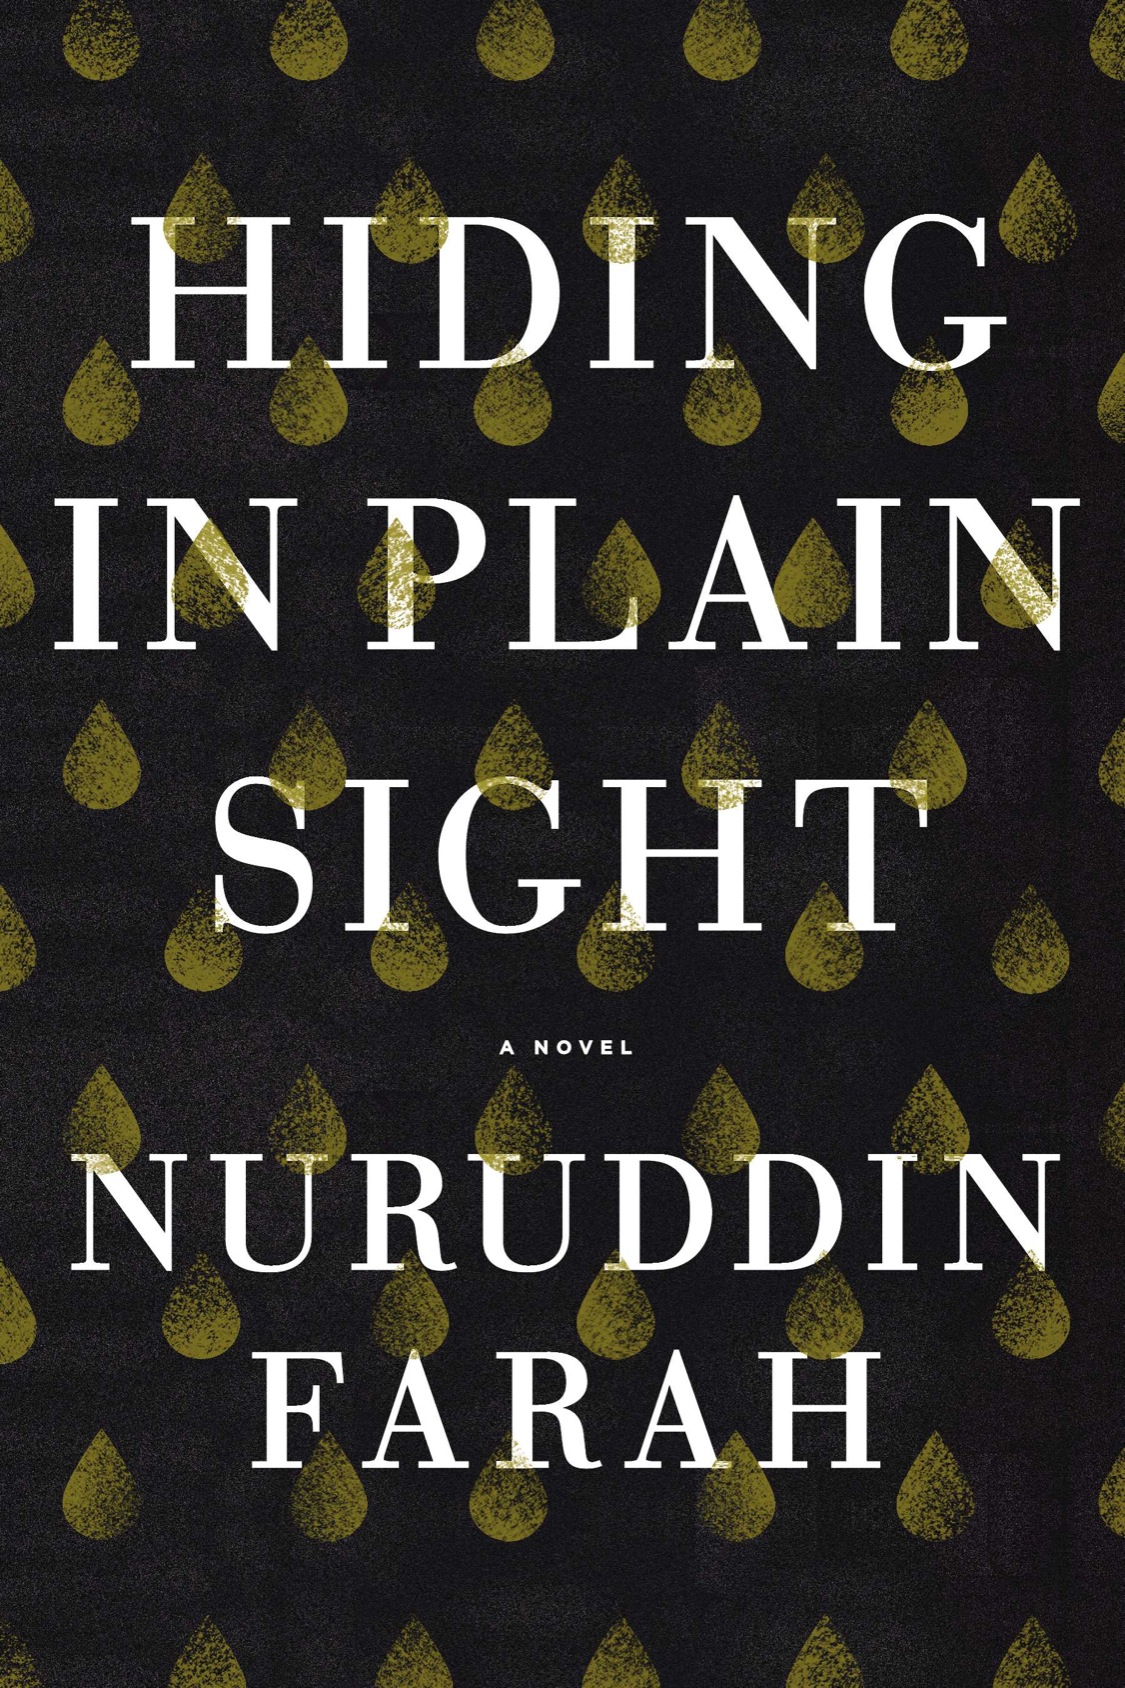 Hiding in Plain Sight (2014) by Nuruddin Farah